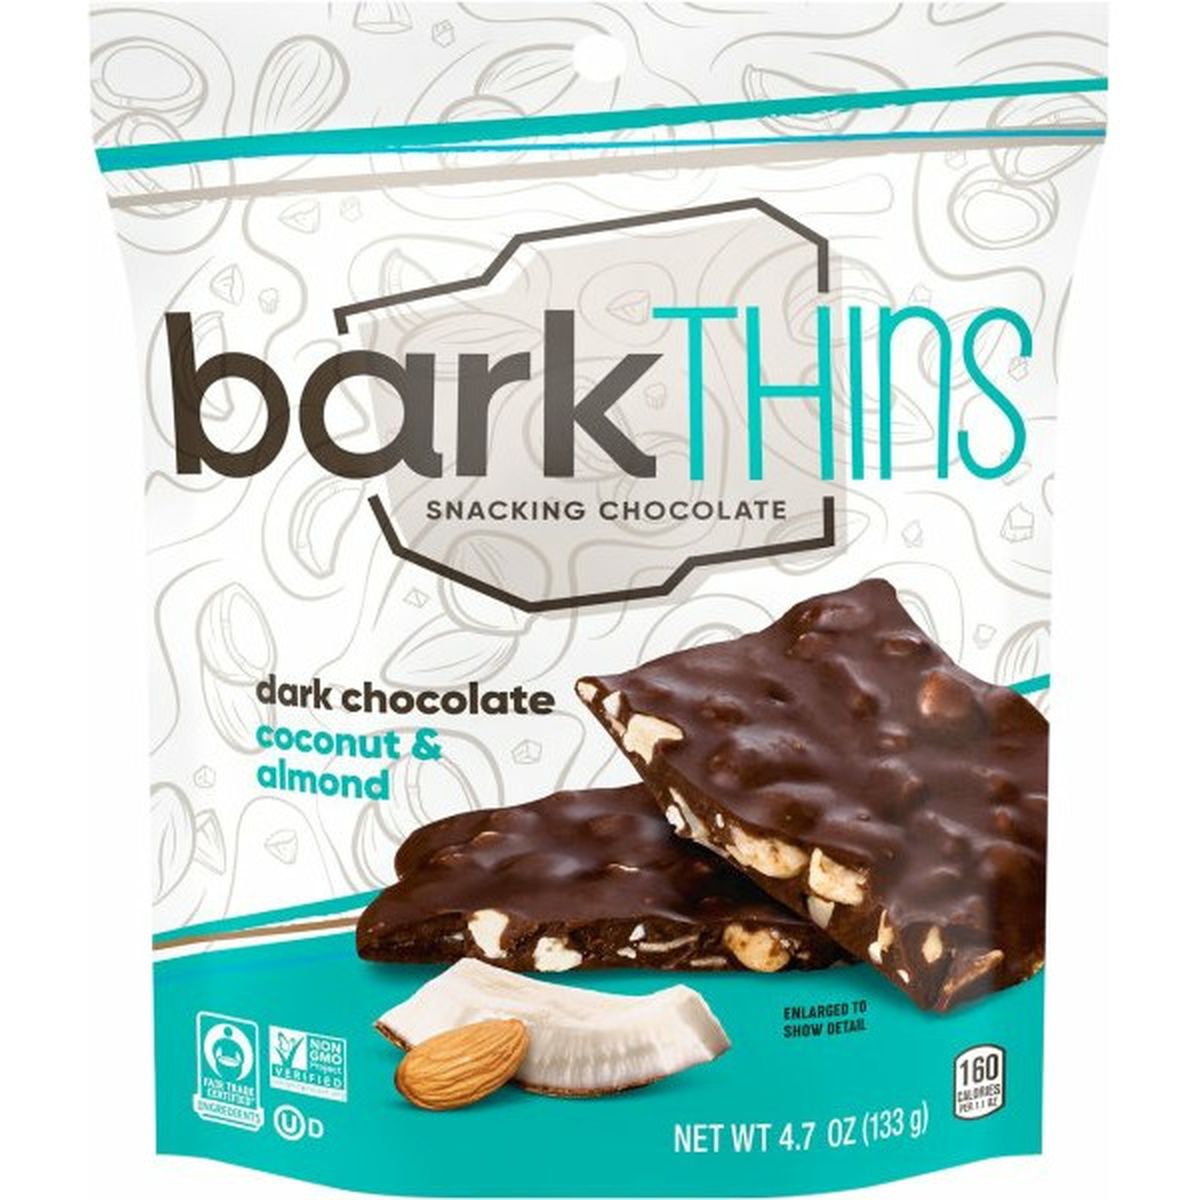 Calories in barkTHINS Snacking Chocolate, Dark Chocolate, Coconut & Almond